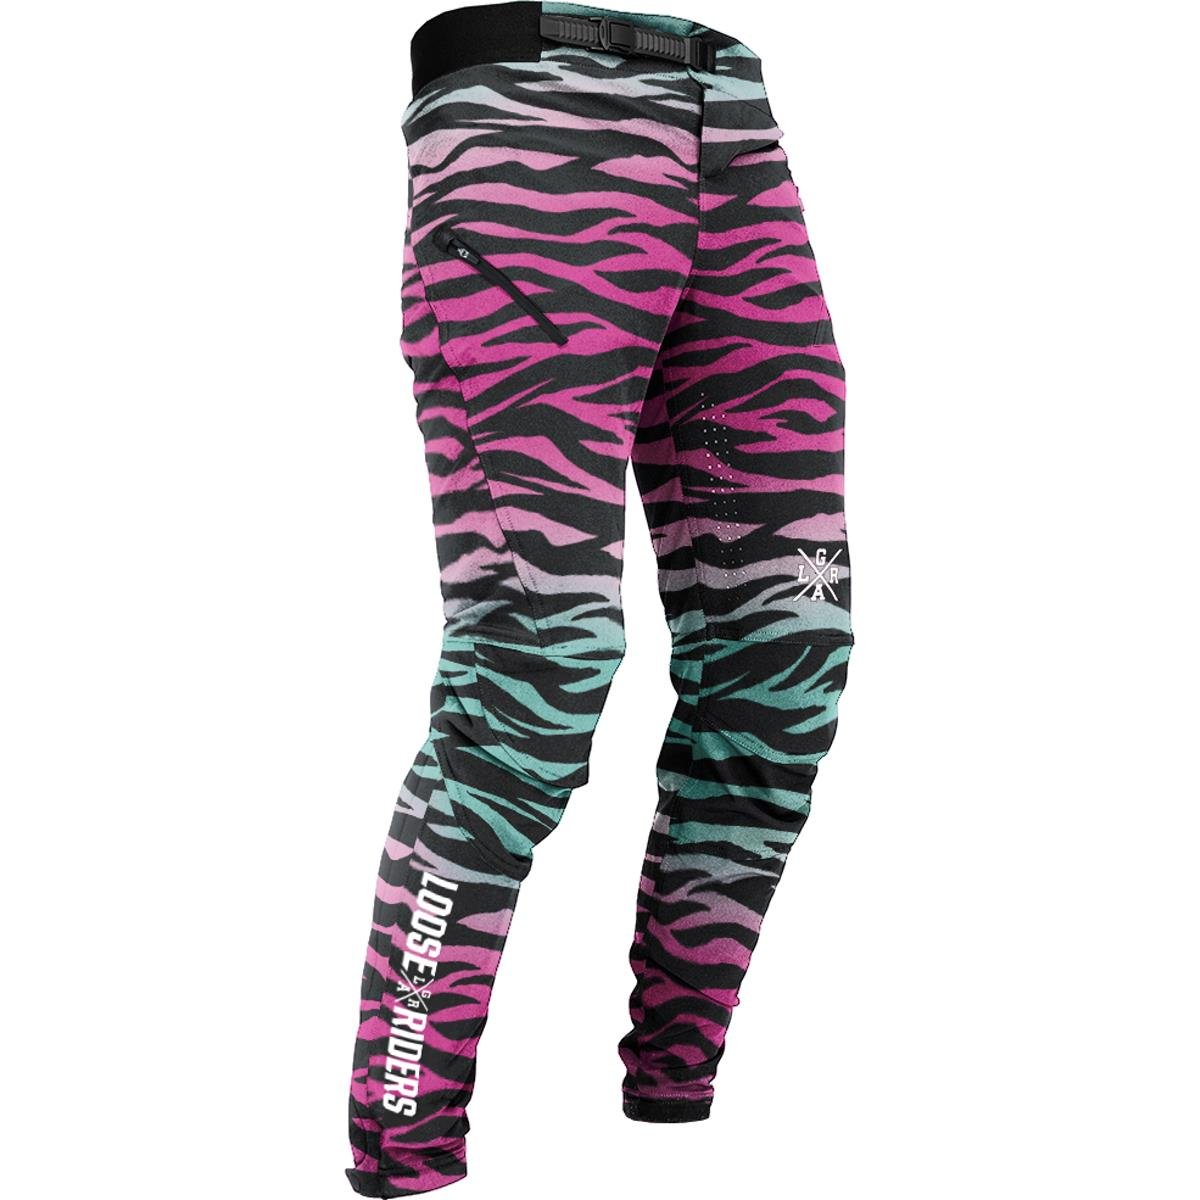 Loose Riders MTB Pants C/S Evo - Rainbow Zebra